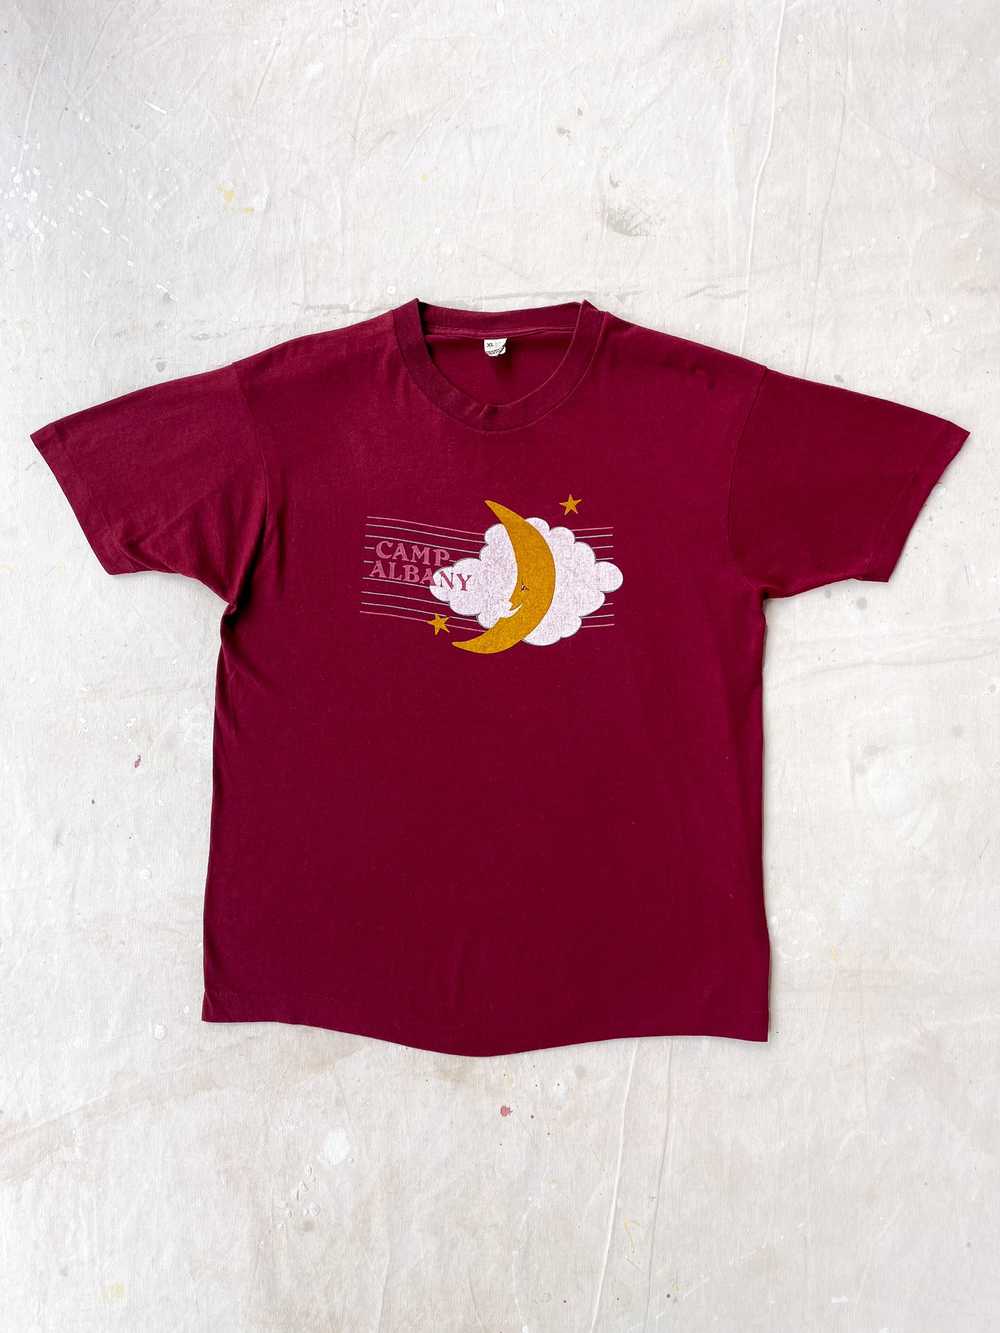 80's Camp Albany T-Shirt—[XL] - image 2